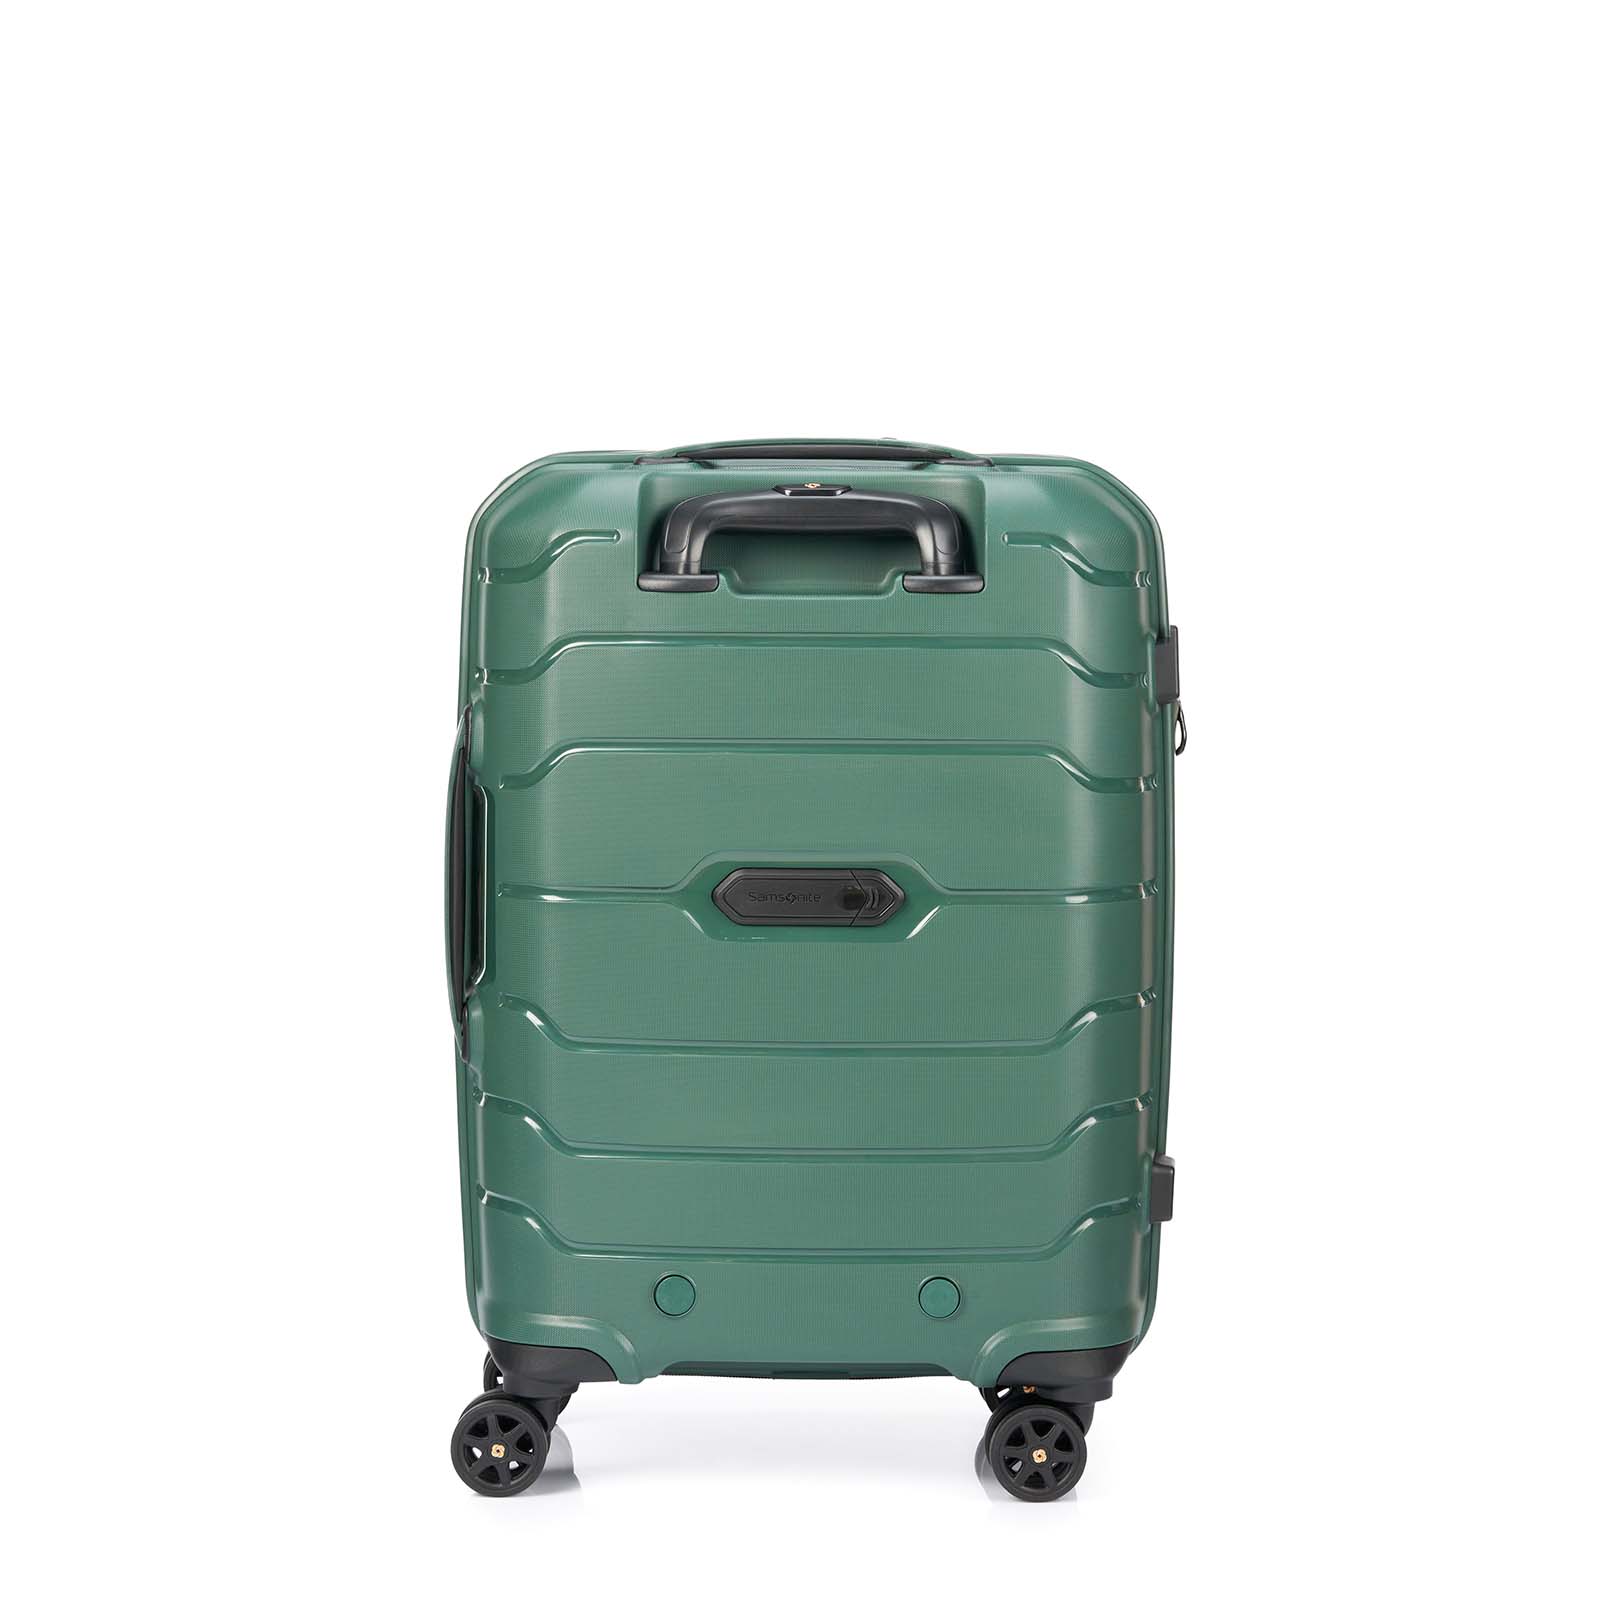 Samsonite-Oc2lite-55cm-Carry-On-Suitcase-Urban-Green-Back